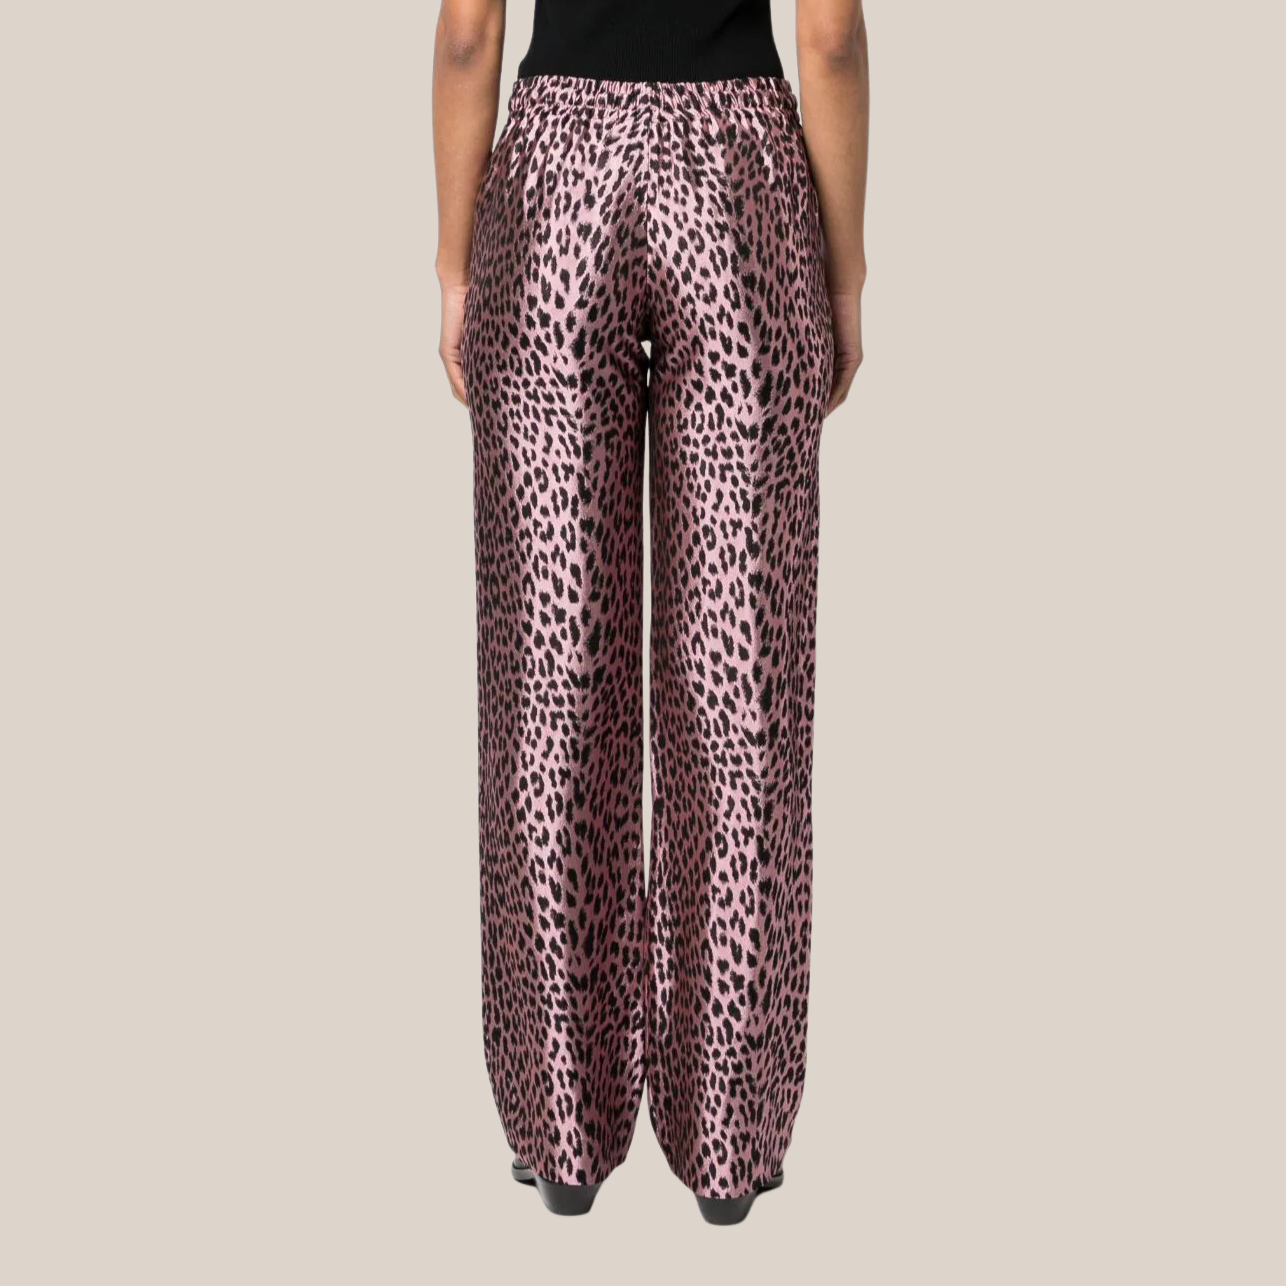 Gotstyle Fashion - Zadig & Voltaire Pants Leopard Pattern Jacquard Pant - Pink